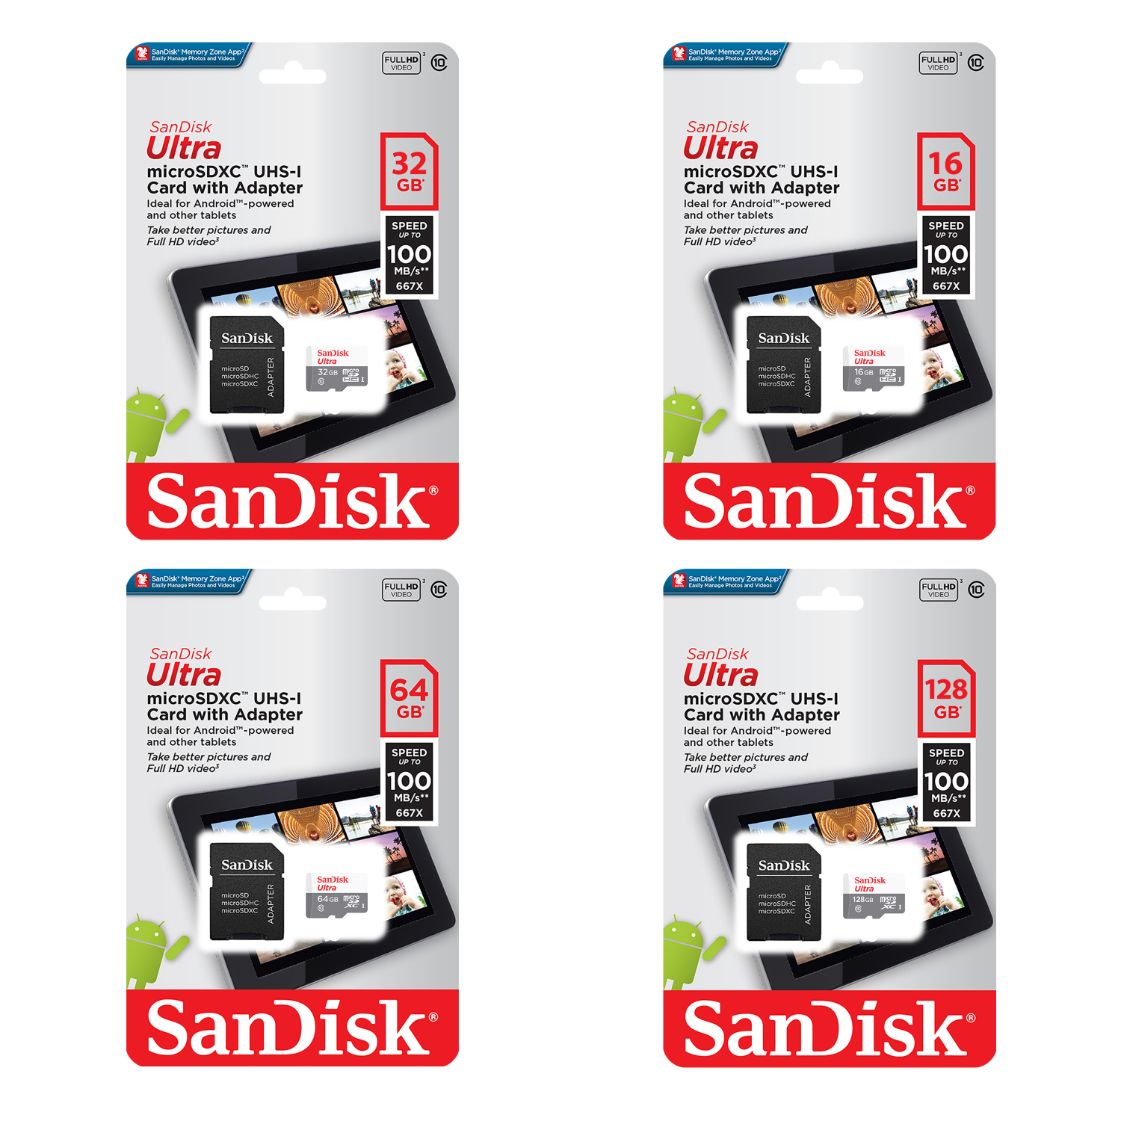 SanDisk Ultra PLUS 32GB microSD Memory Card